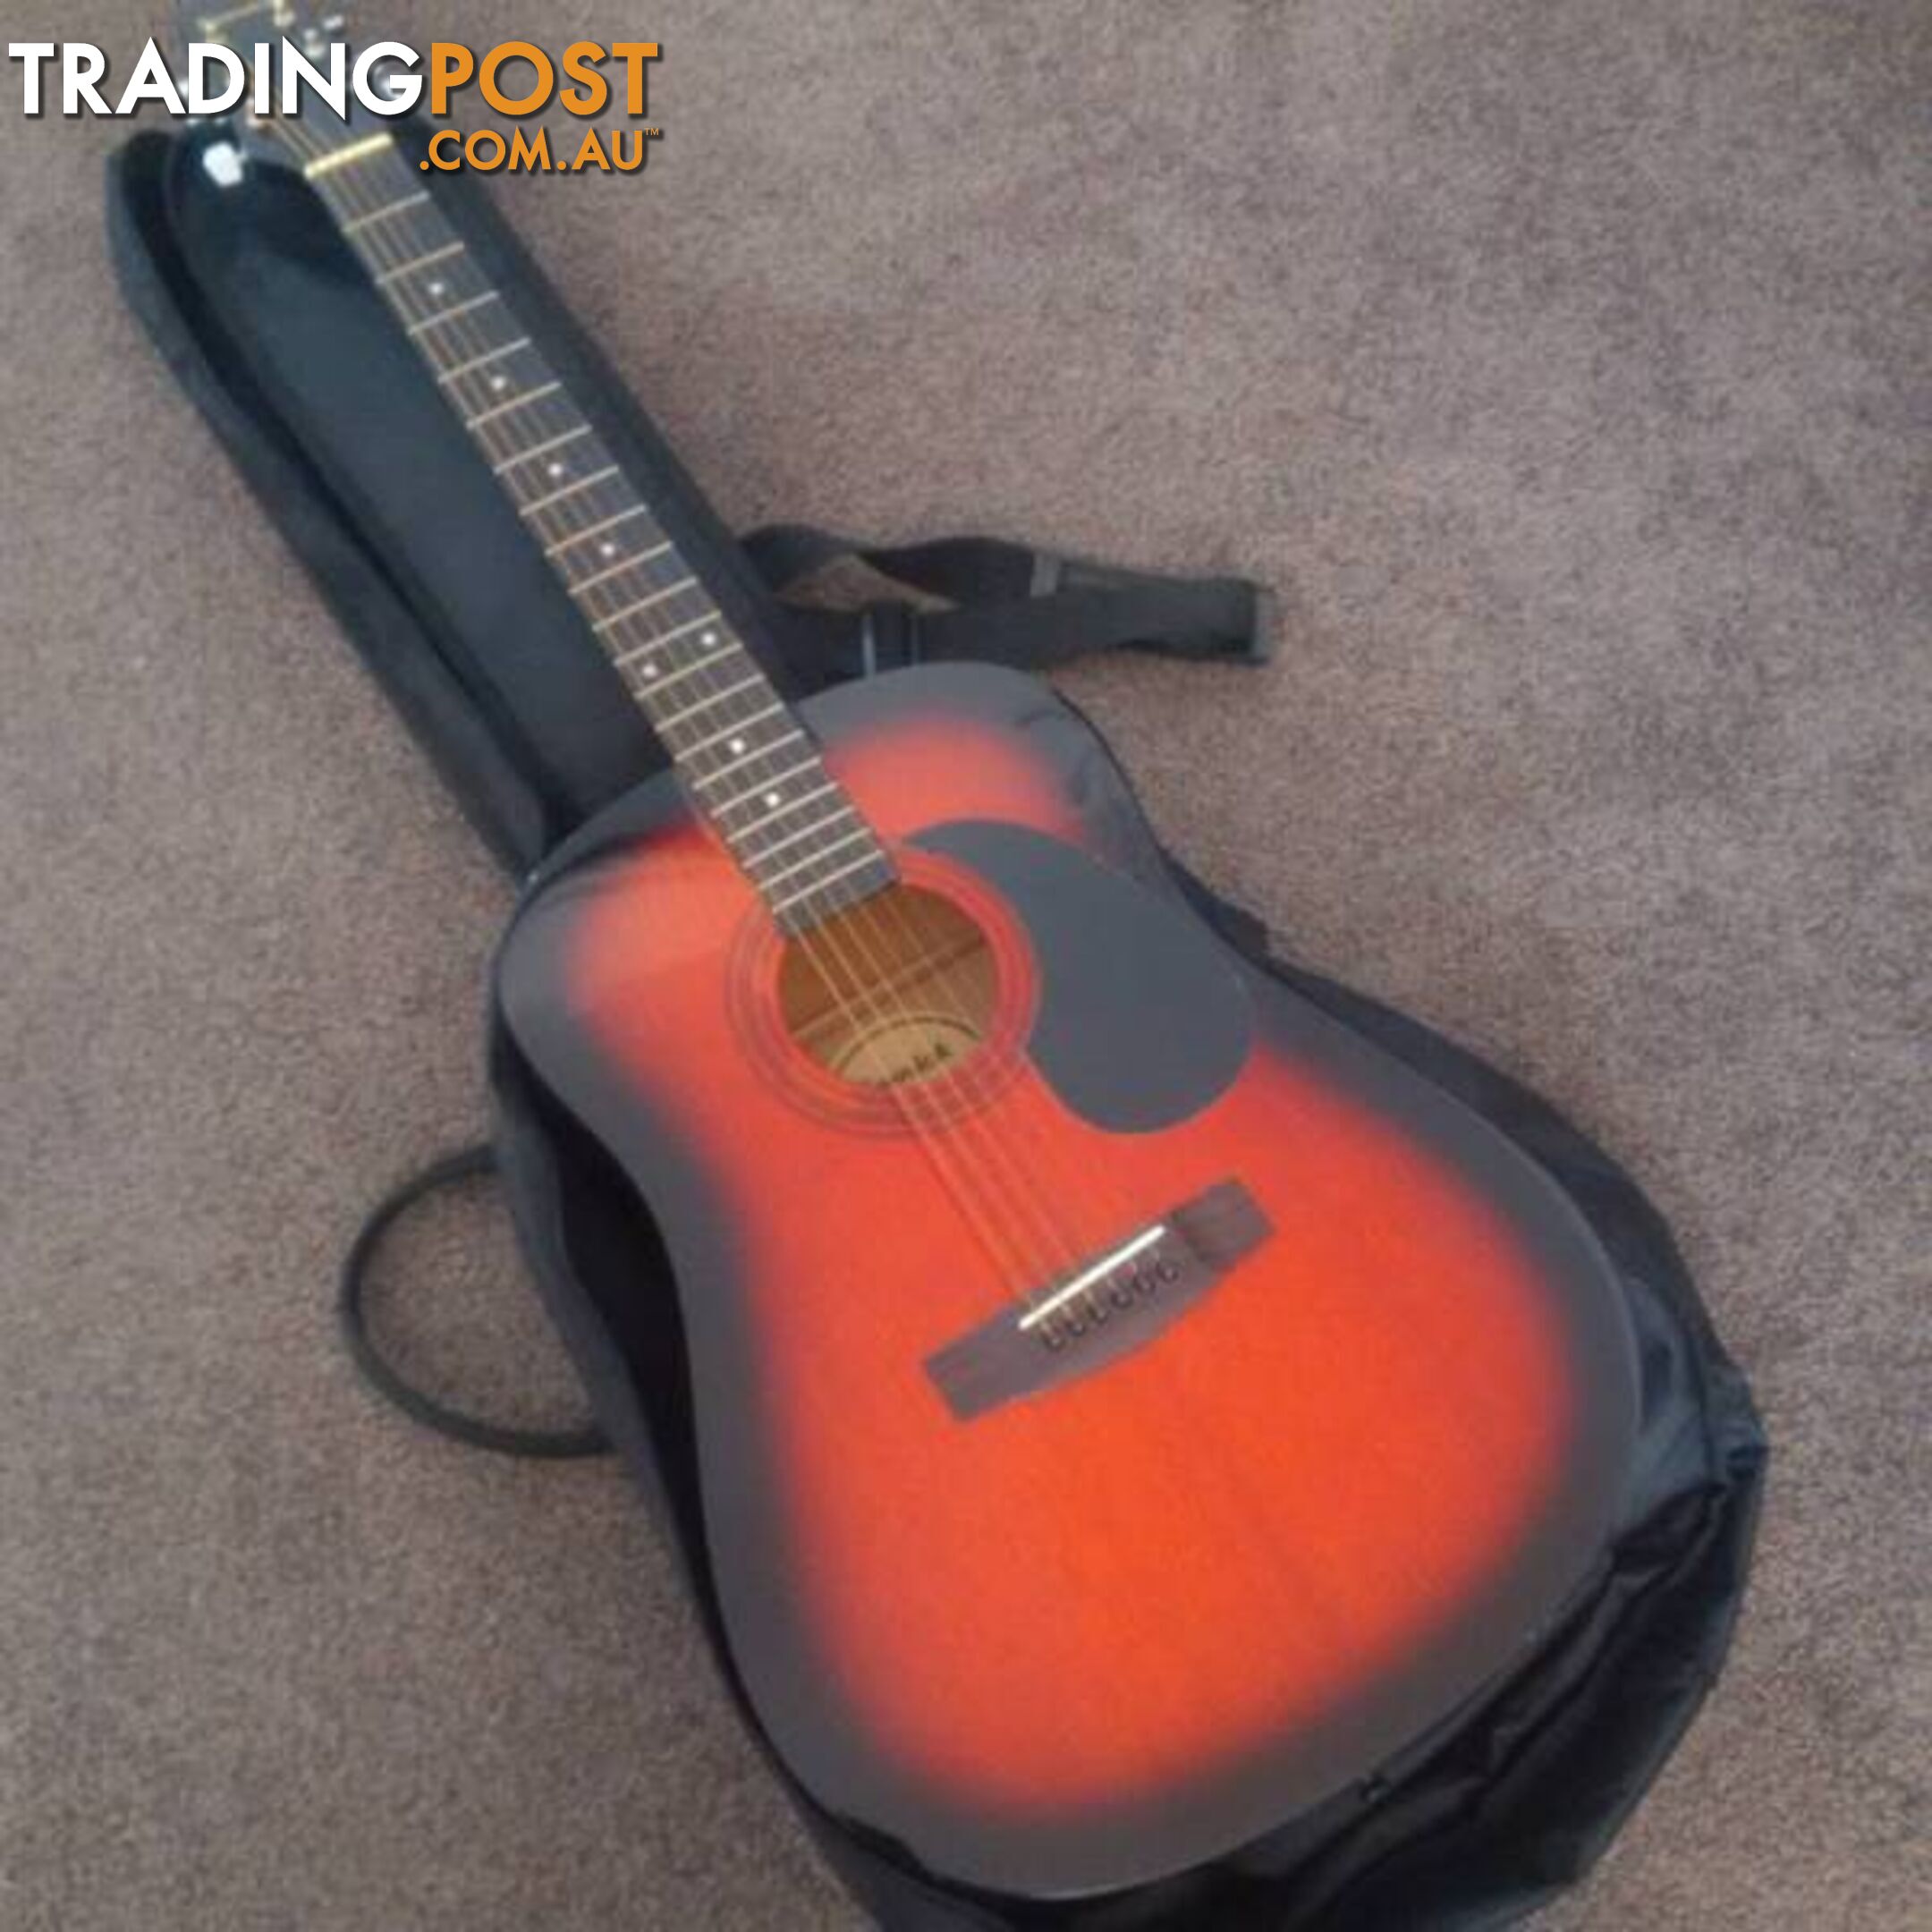 Fender Bass Amp, BXR-200, USA $750. Acoustic Guitar $60